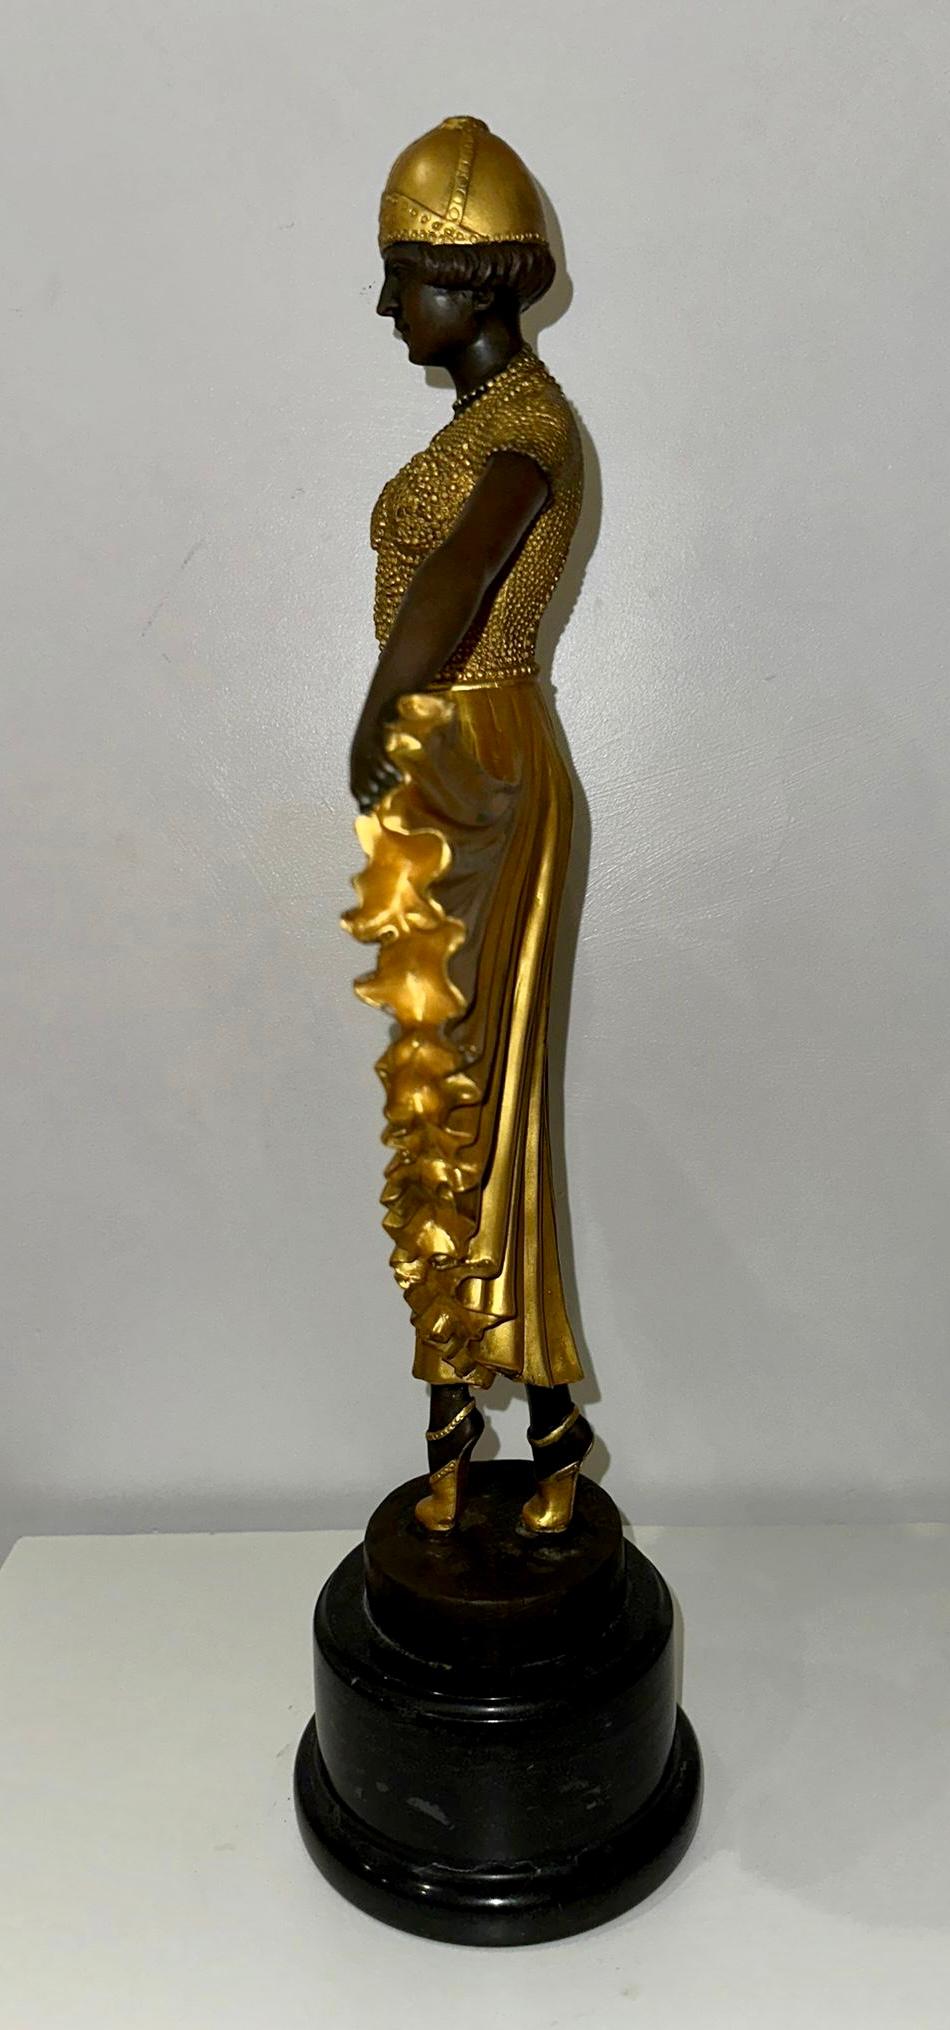 Tänzerin von Demétre Chiparus 1886 - 1947
Große chrysoelephantine Skulptur in vergoldeter Bronze Marmorsockel.
Signiert 